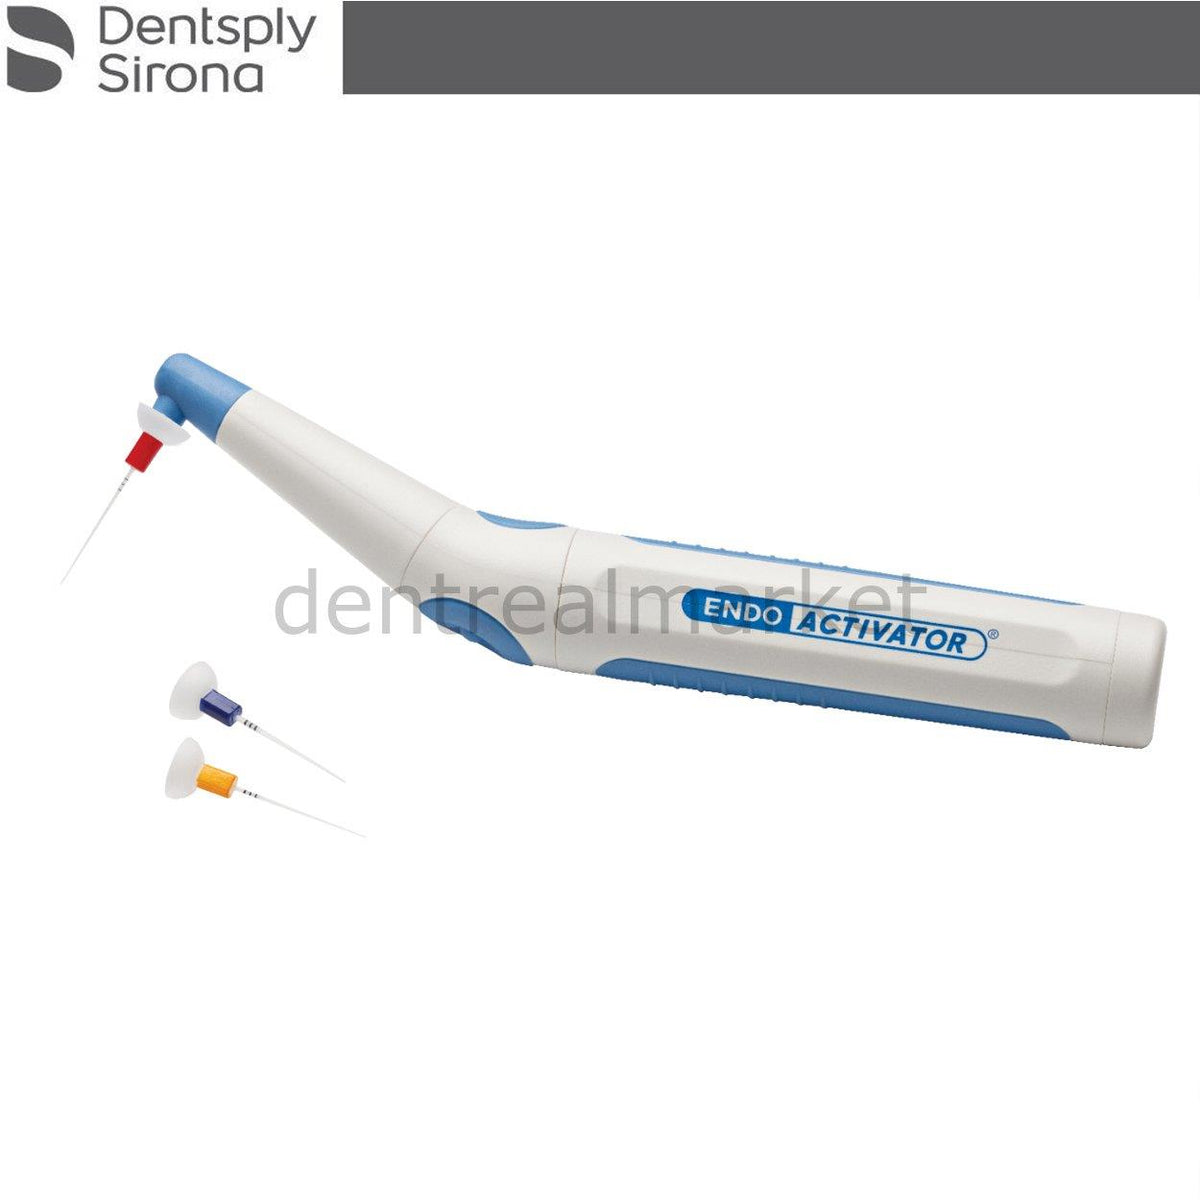 DentrealStore - Dentsply-Sirona Endo Activator for use in endodontic treatment.